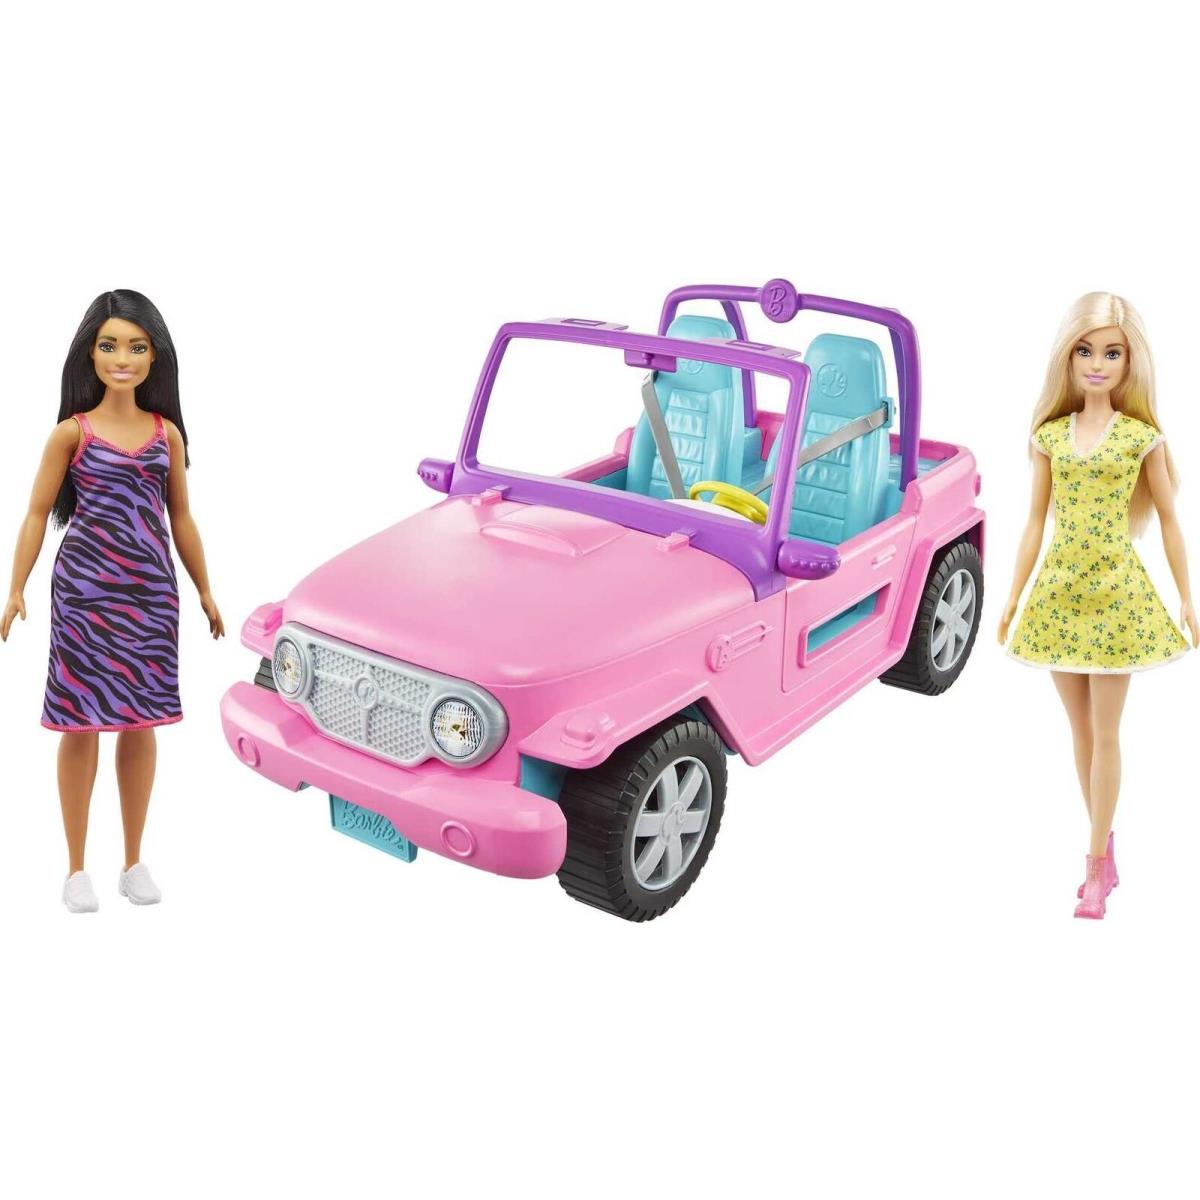 Mattel - Barbie and Friend Vehicle